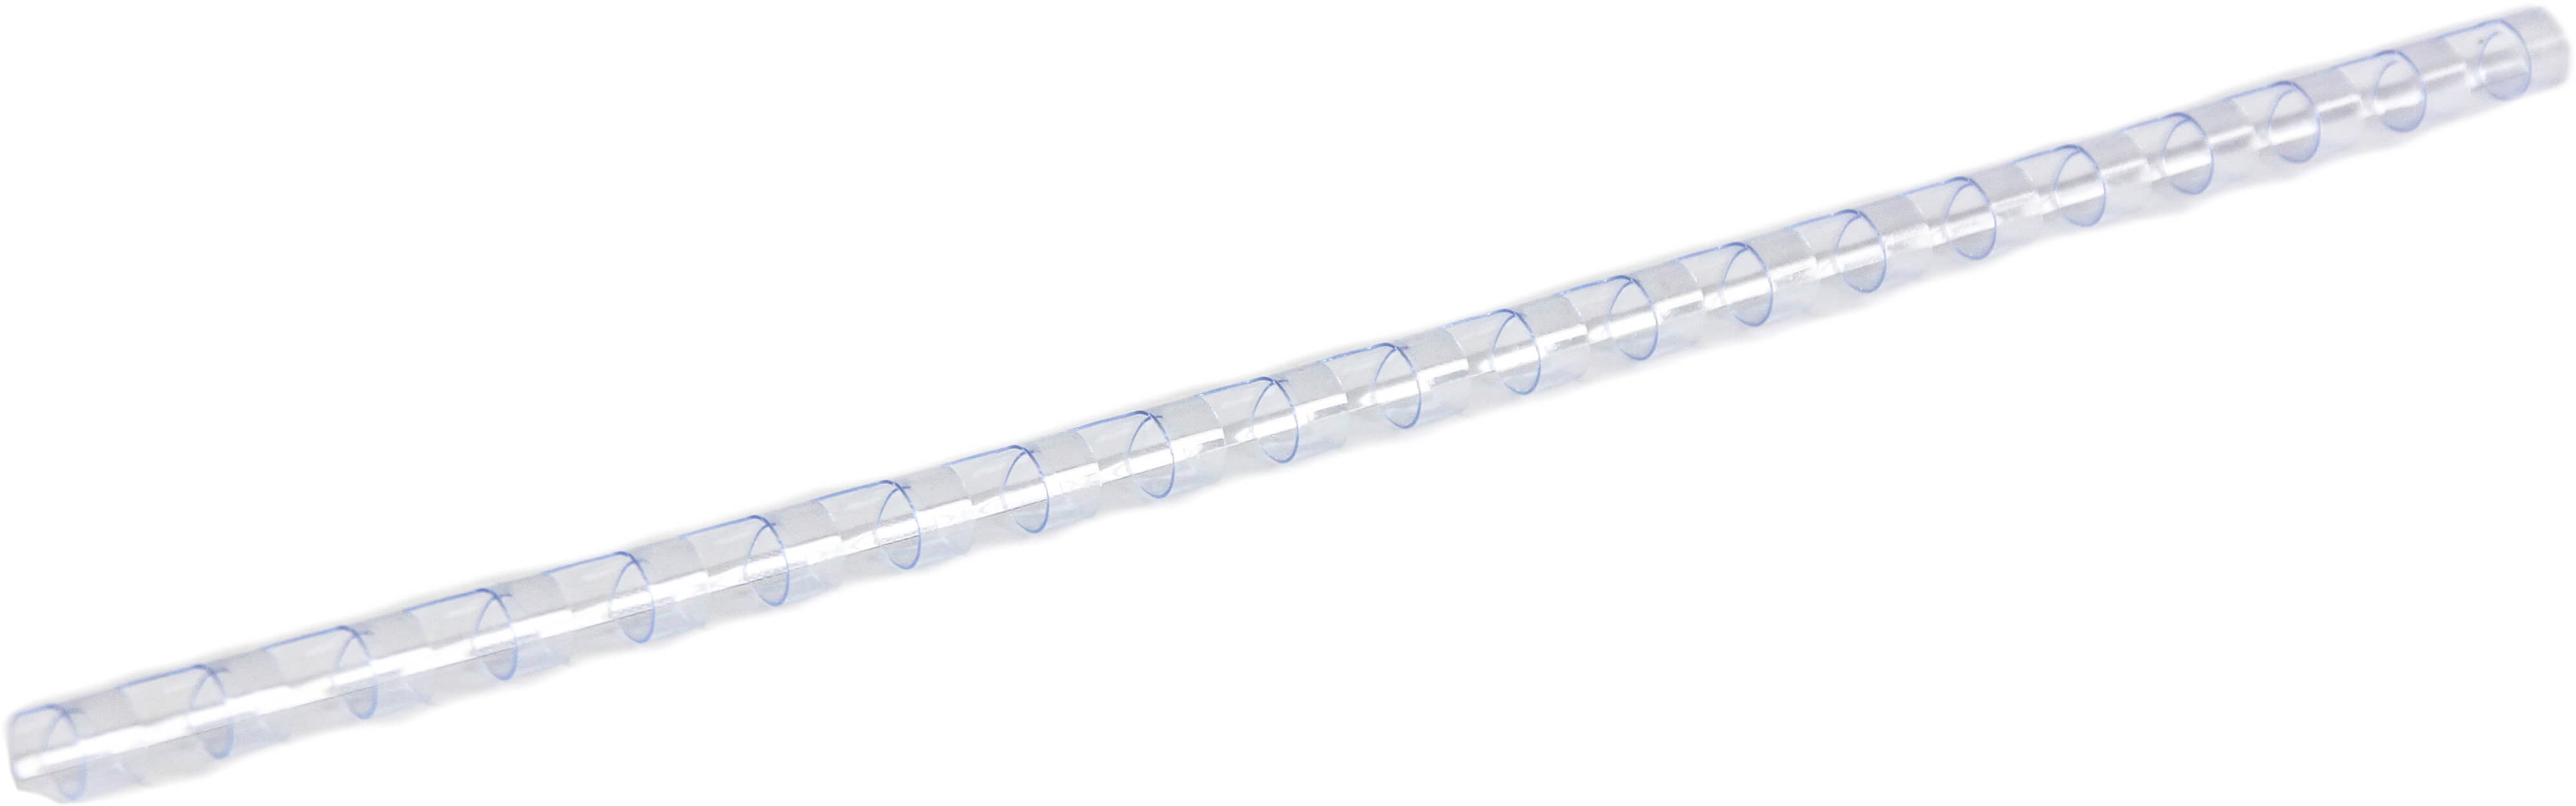 Plastikbinderücken 21 Ringe 6mm transparent (100 Stück)